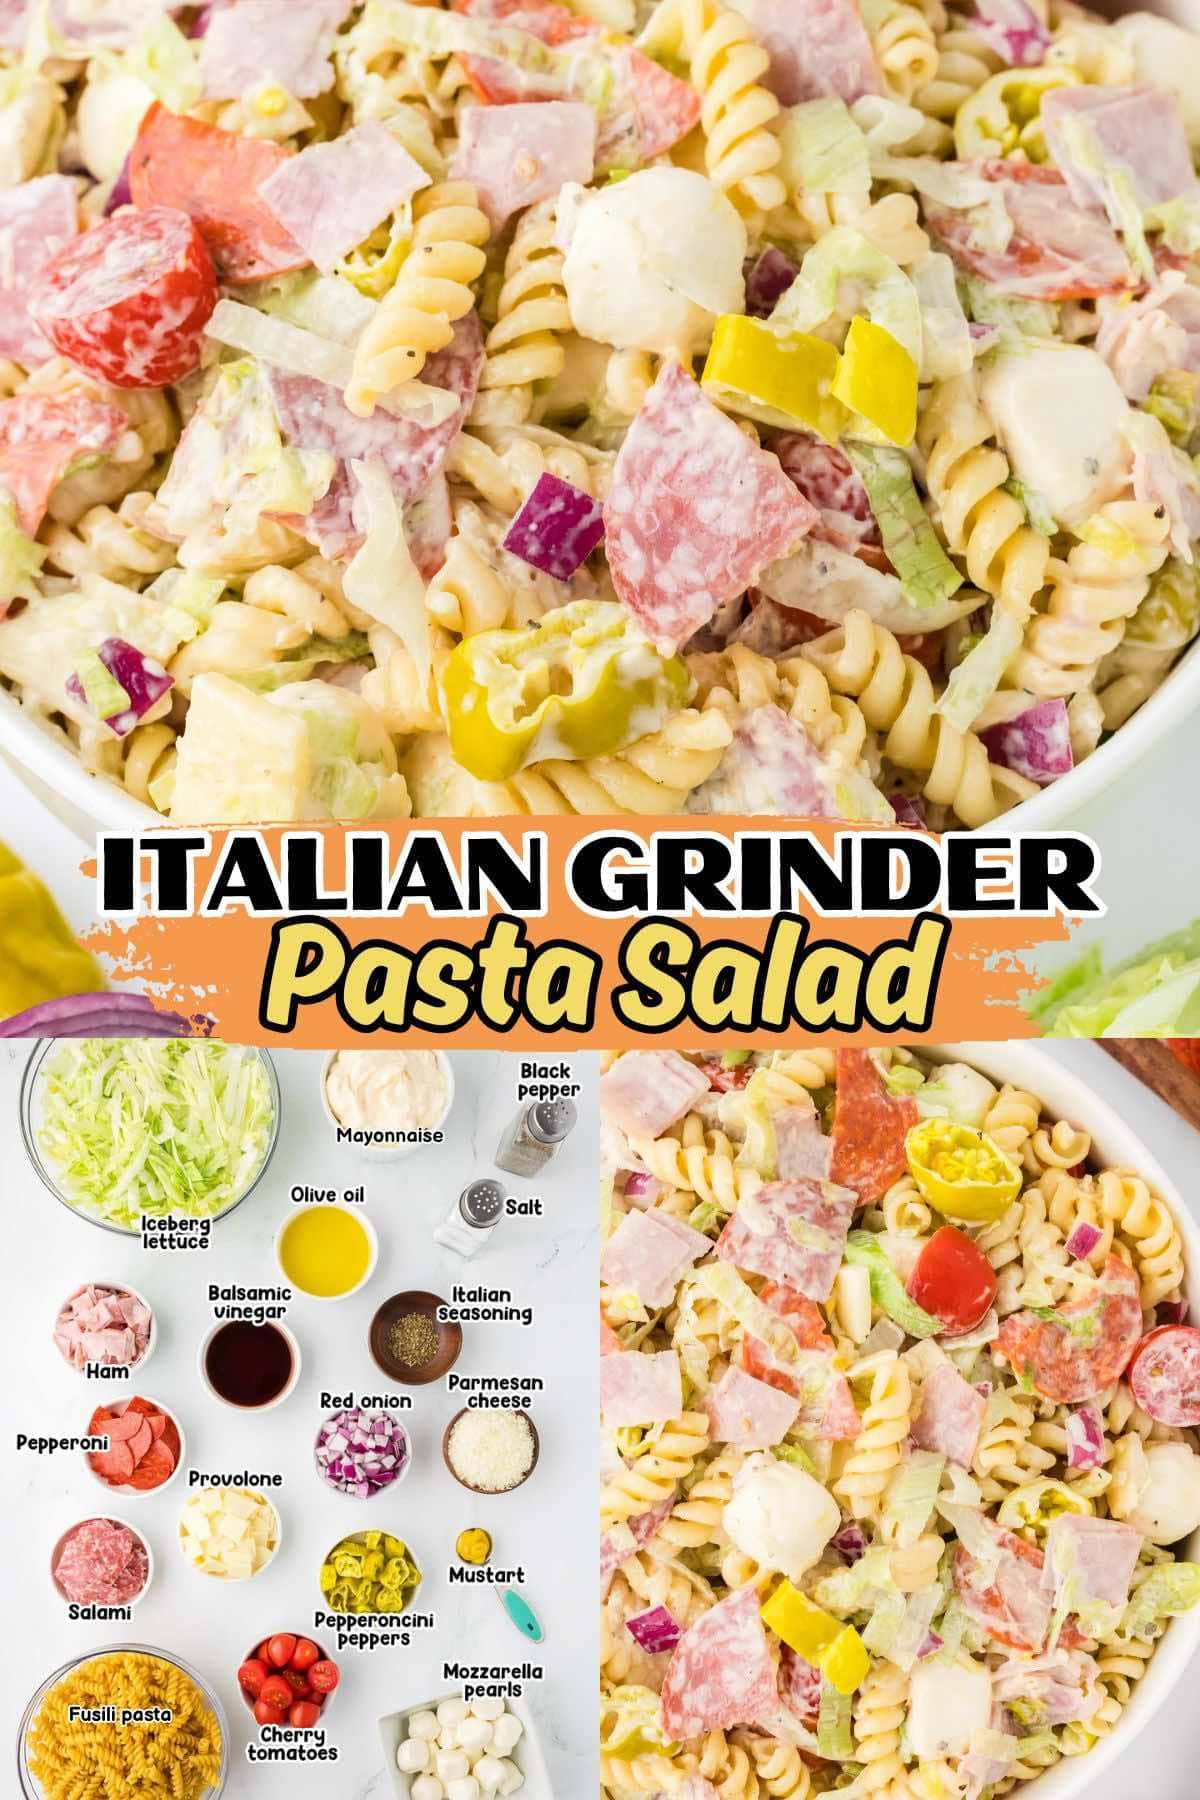 Italian grinder pasta salad pinterest image